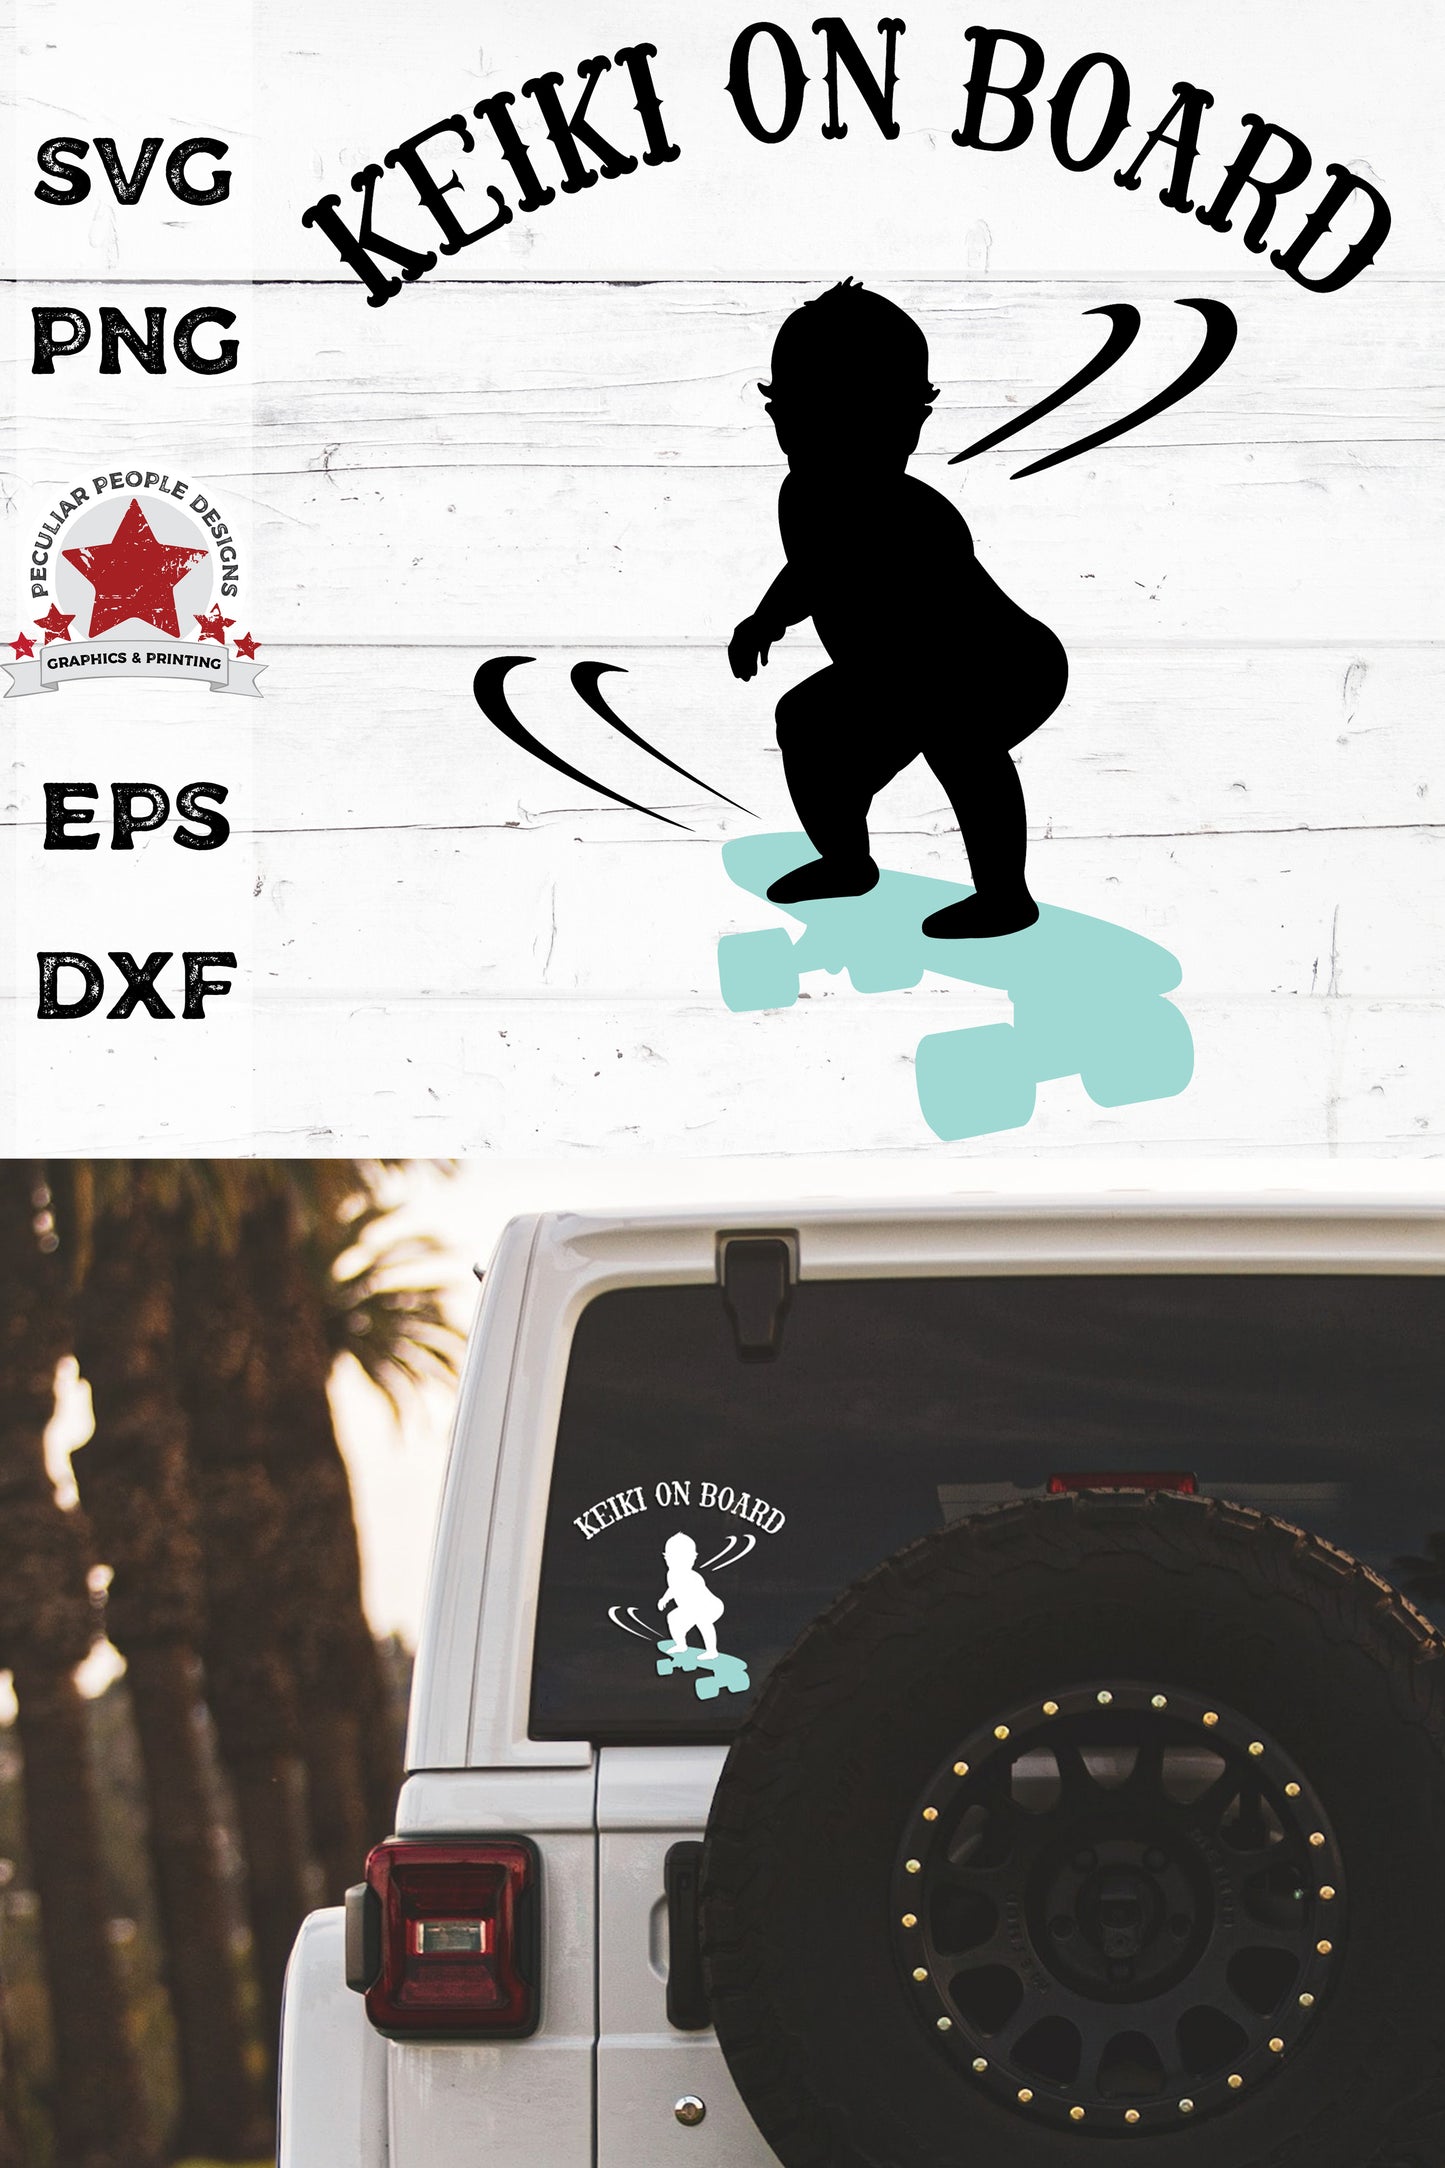 
                  
                    keiki on board - hawaiian skateboarding boy svg decal on a car's rear window
                  
                